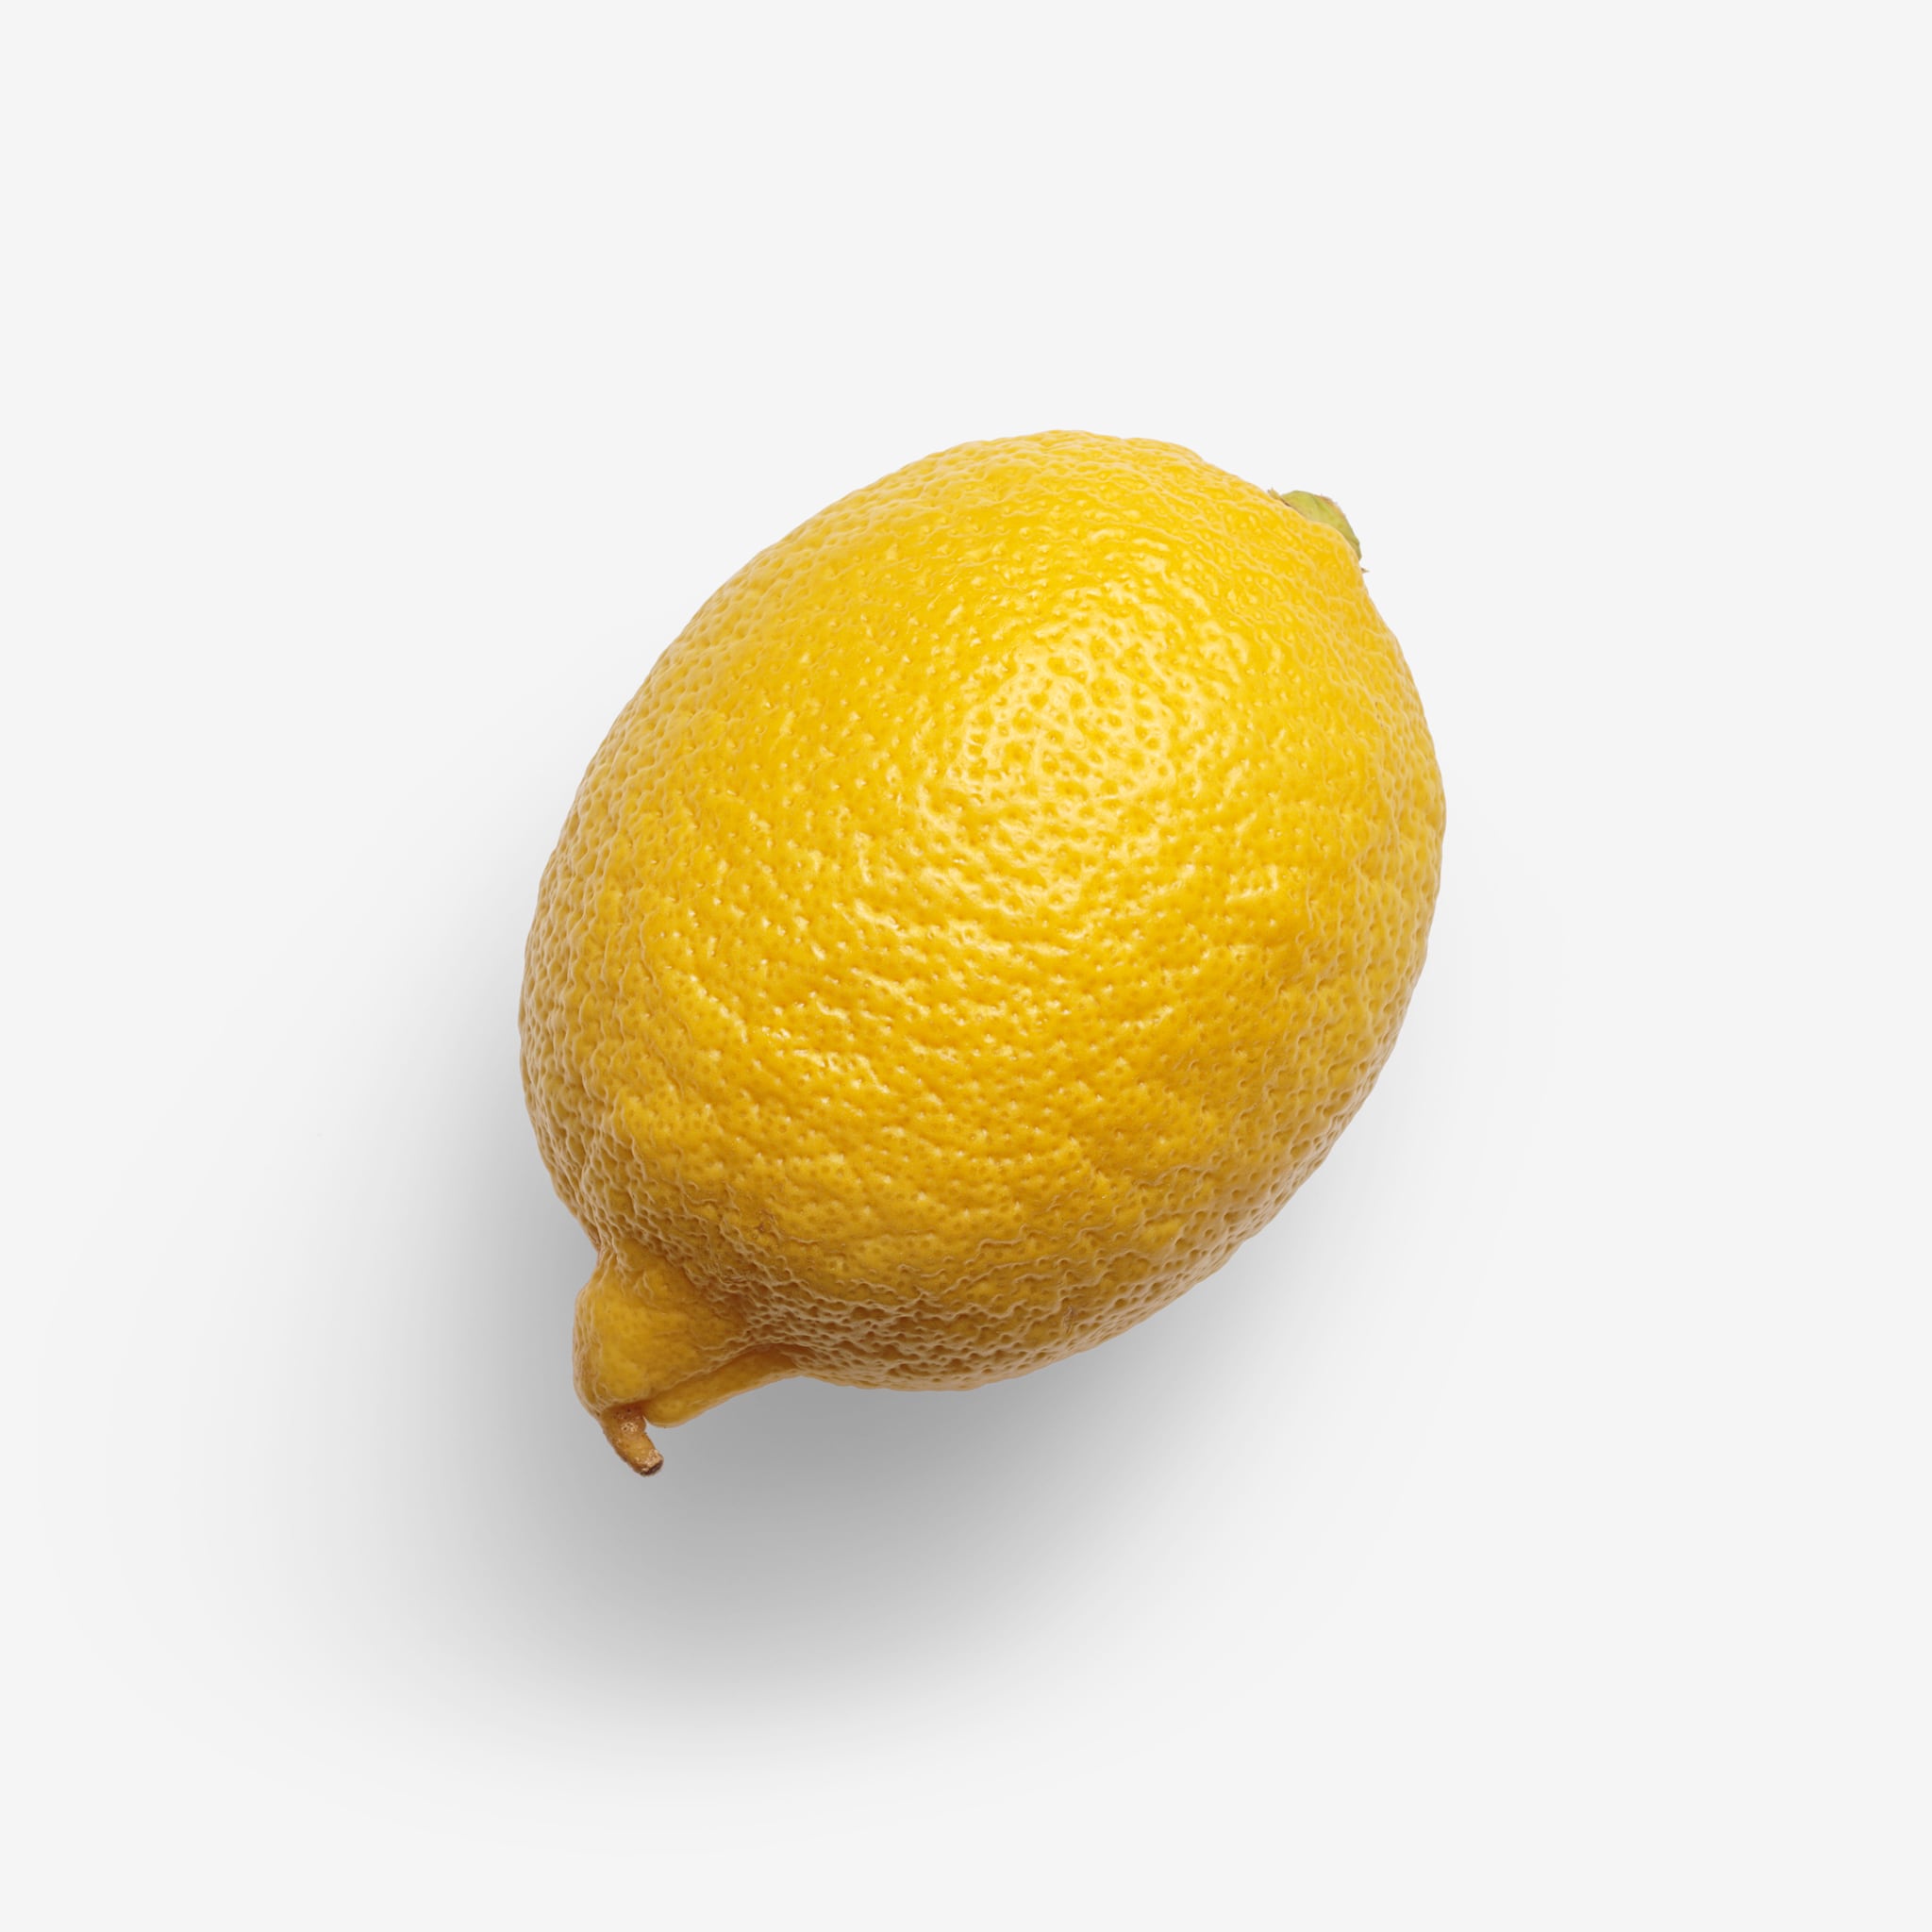 Lemon PSD layered image